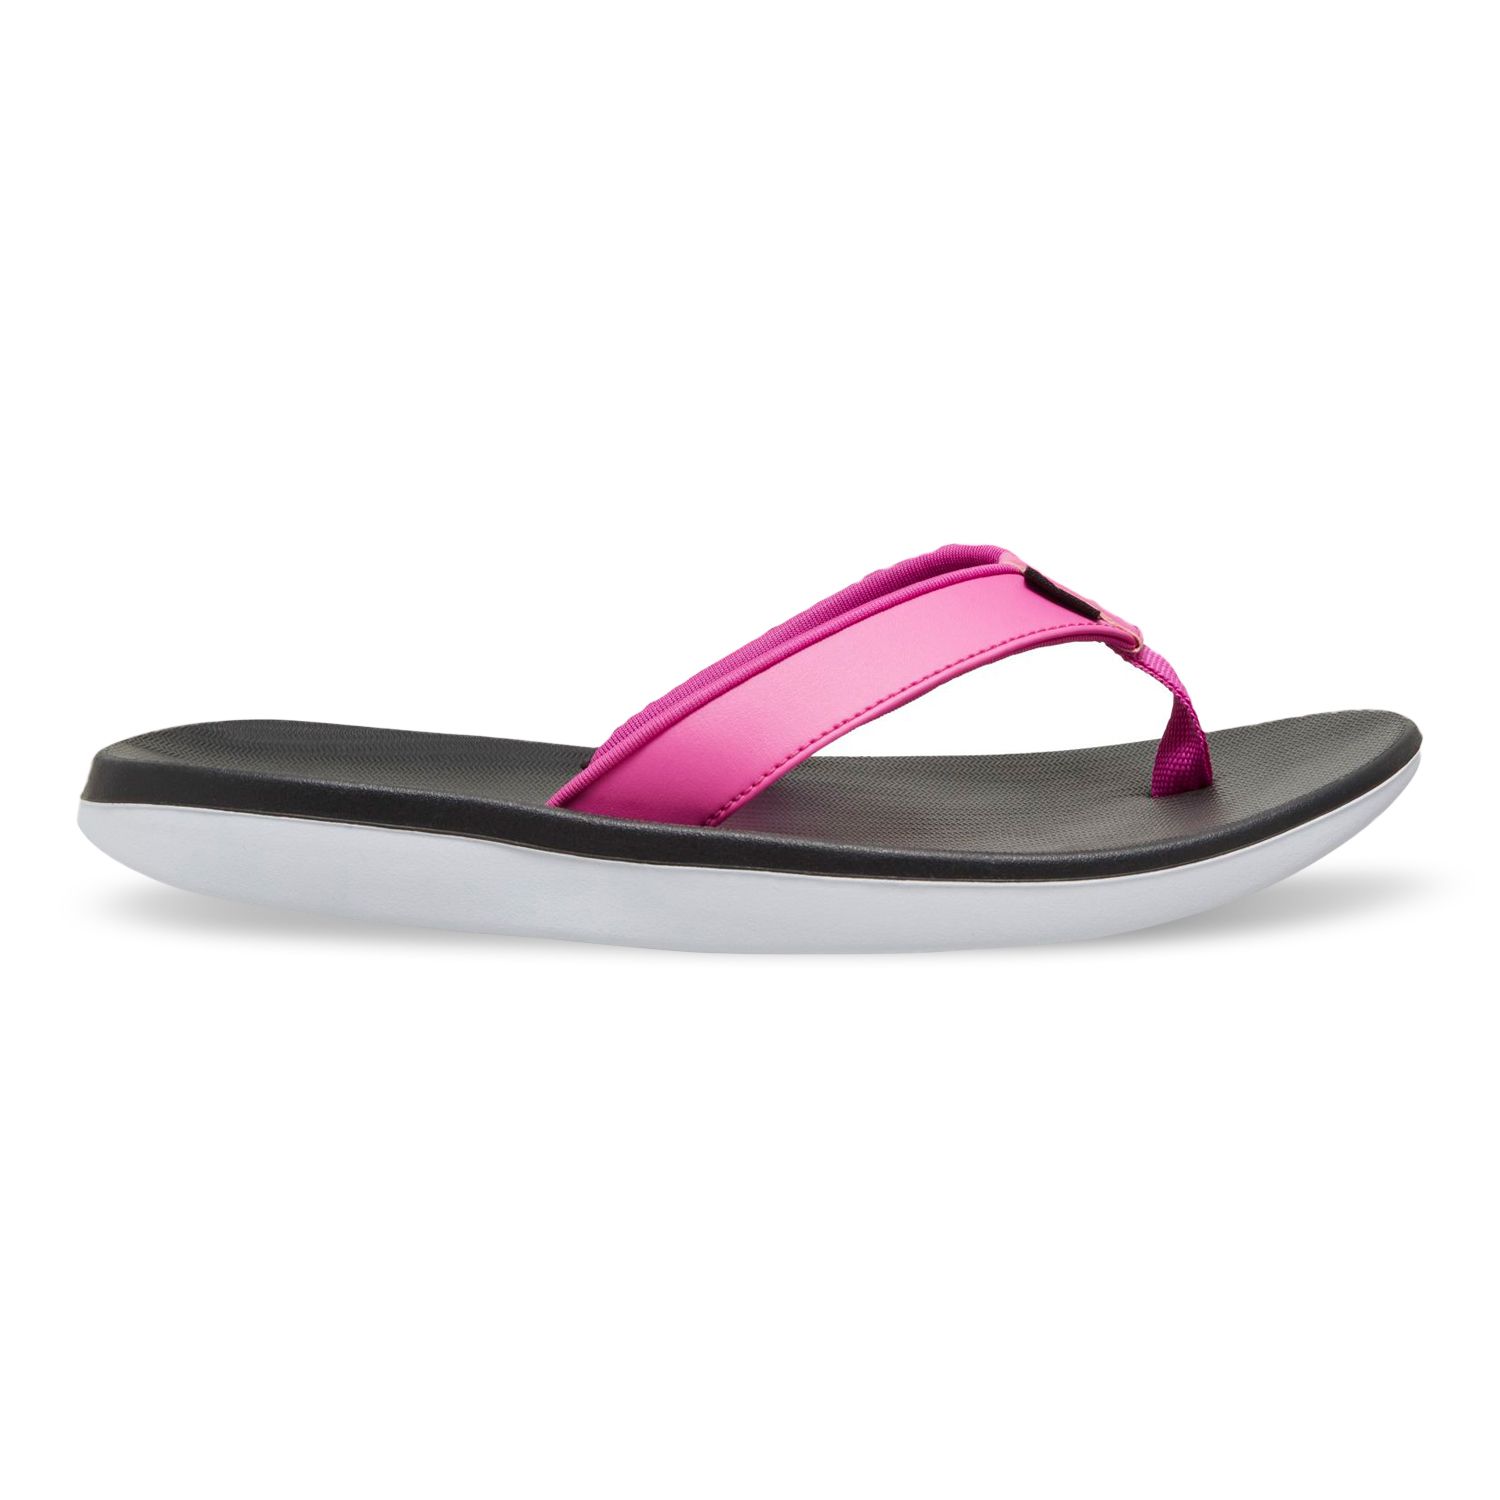 pink and black nike flip flops